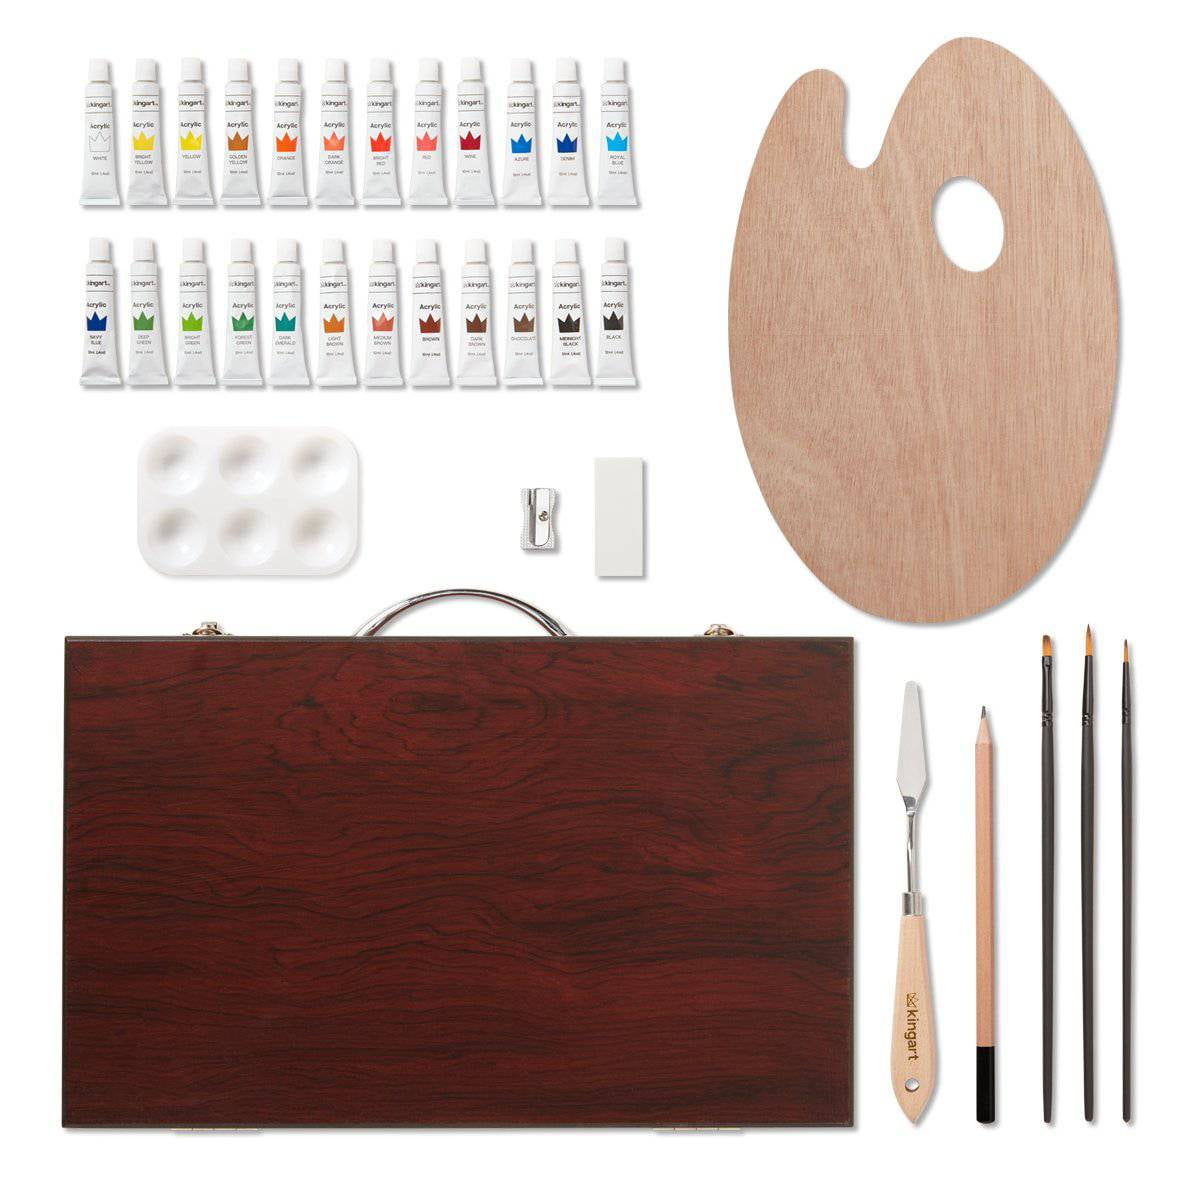 Kingart 24-Piece Acrylic Paint Table & Easel Set